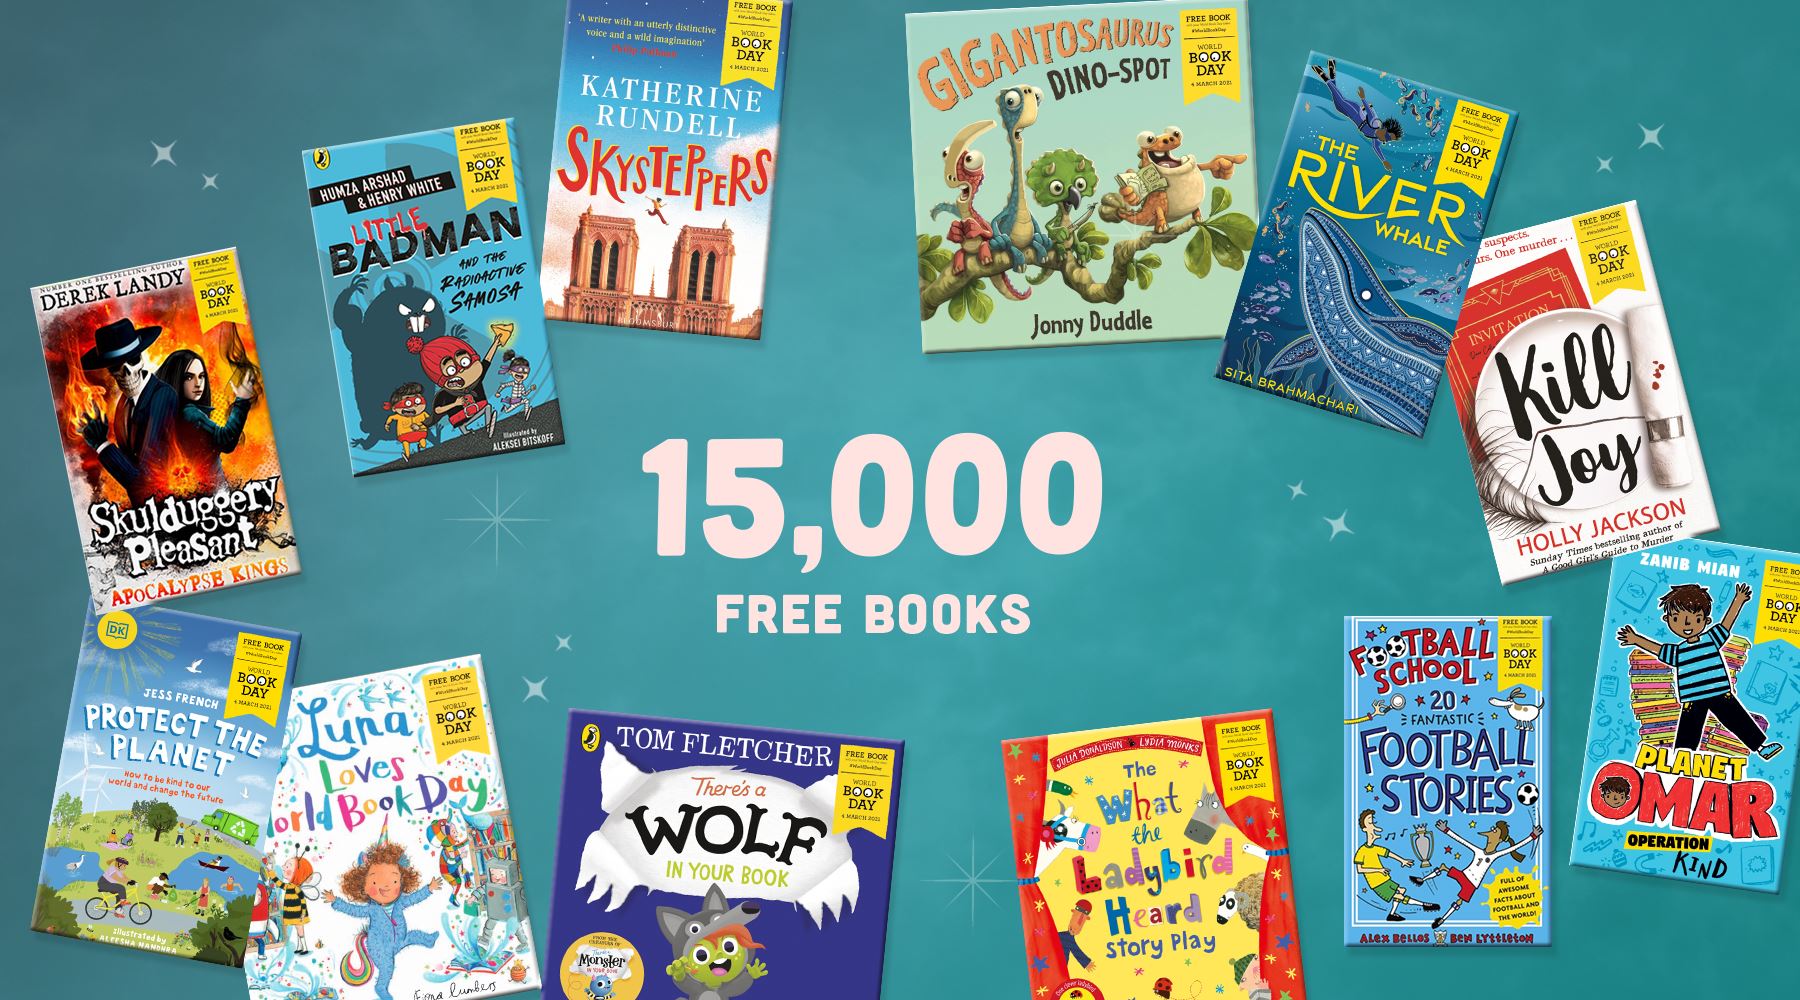 National Online Book Retailer pledges 15,000 free books for Children on World Book Day